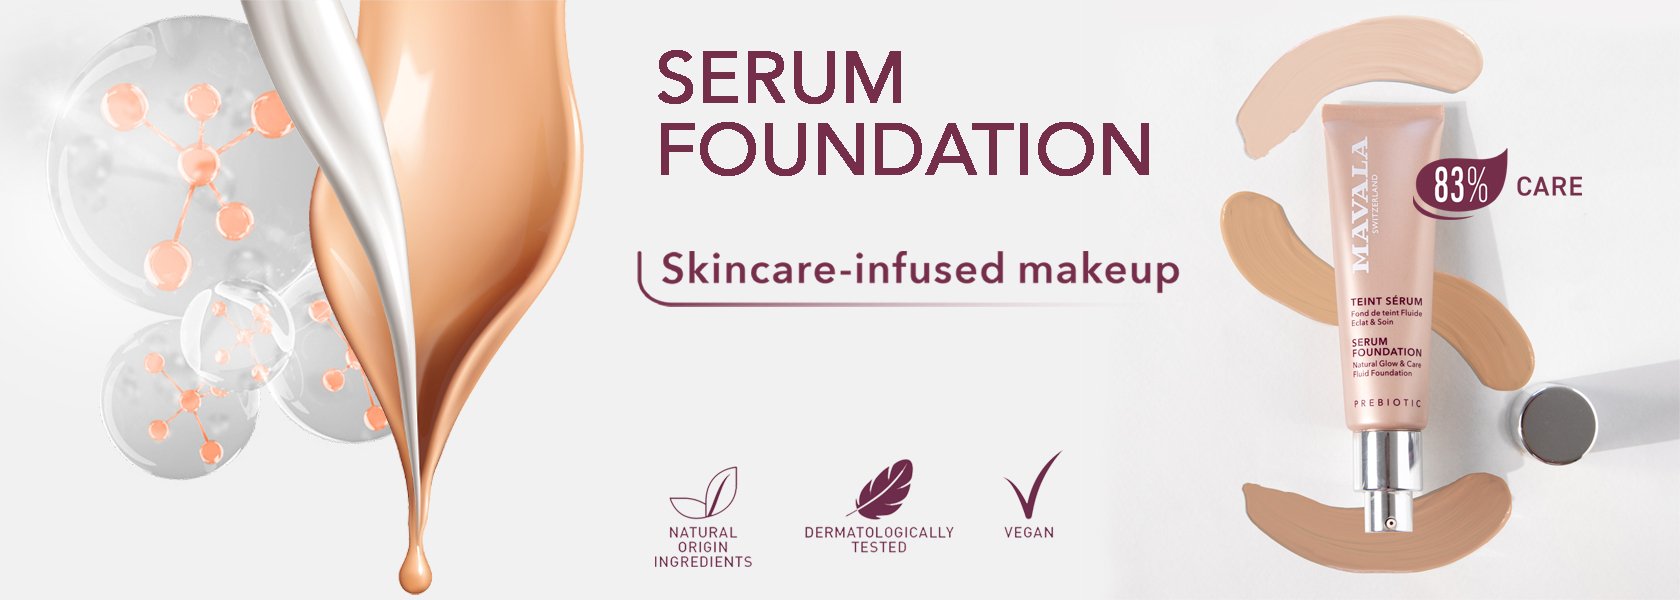 Serum Foundation Category Banner.jpg